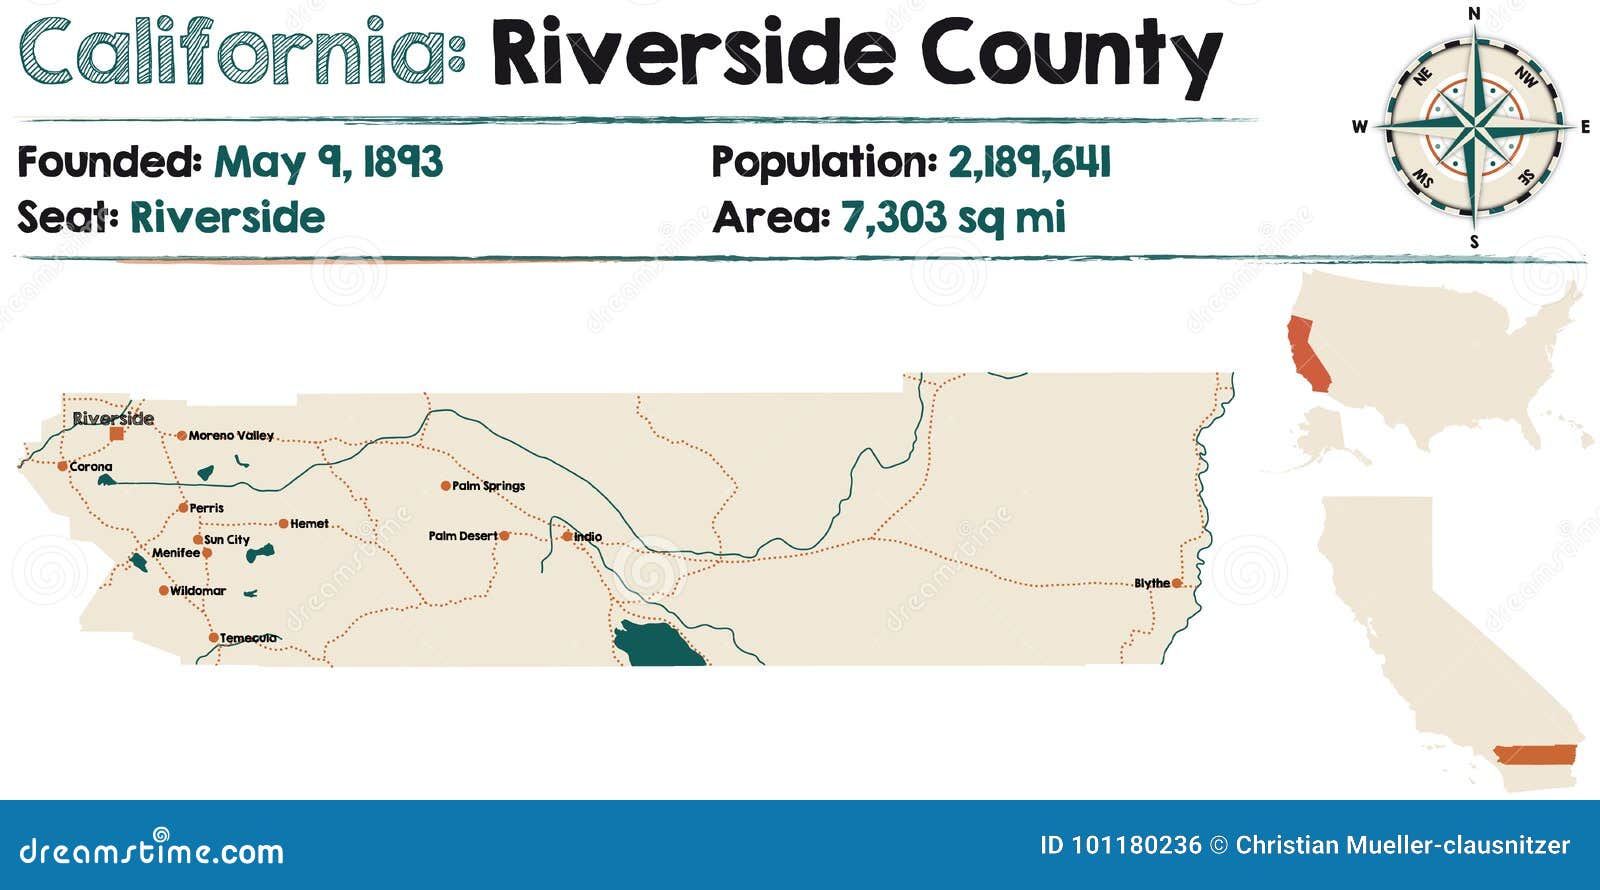 Riverside County, California